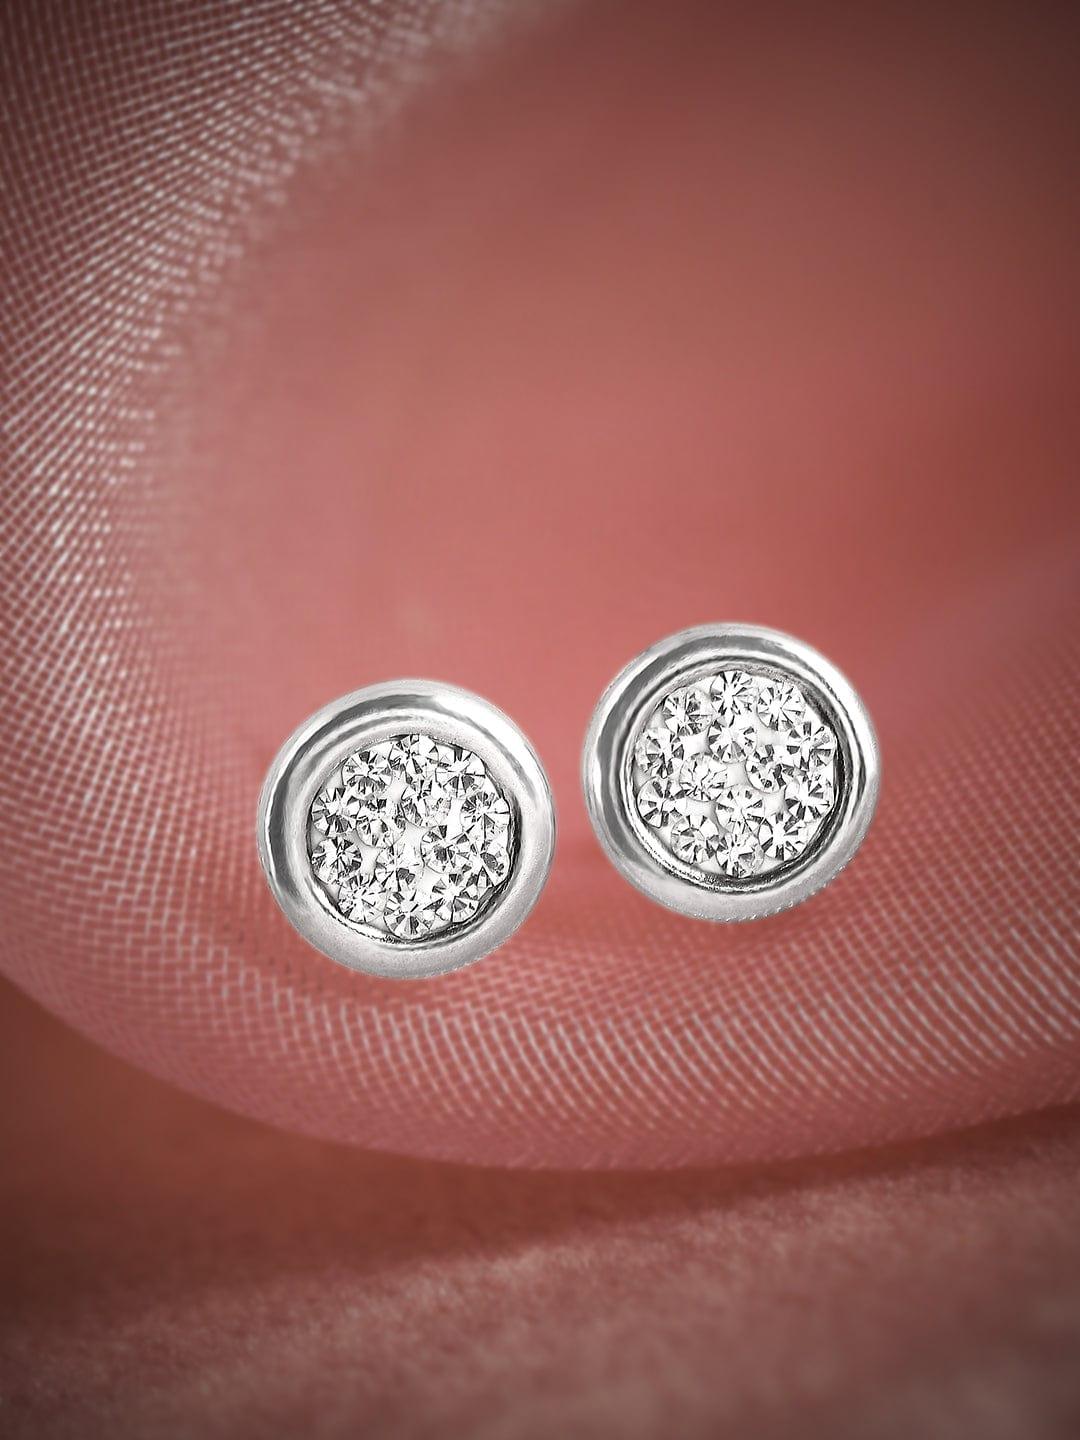 The Zircons In The Bezel - Stud Earrings - Indiakreations